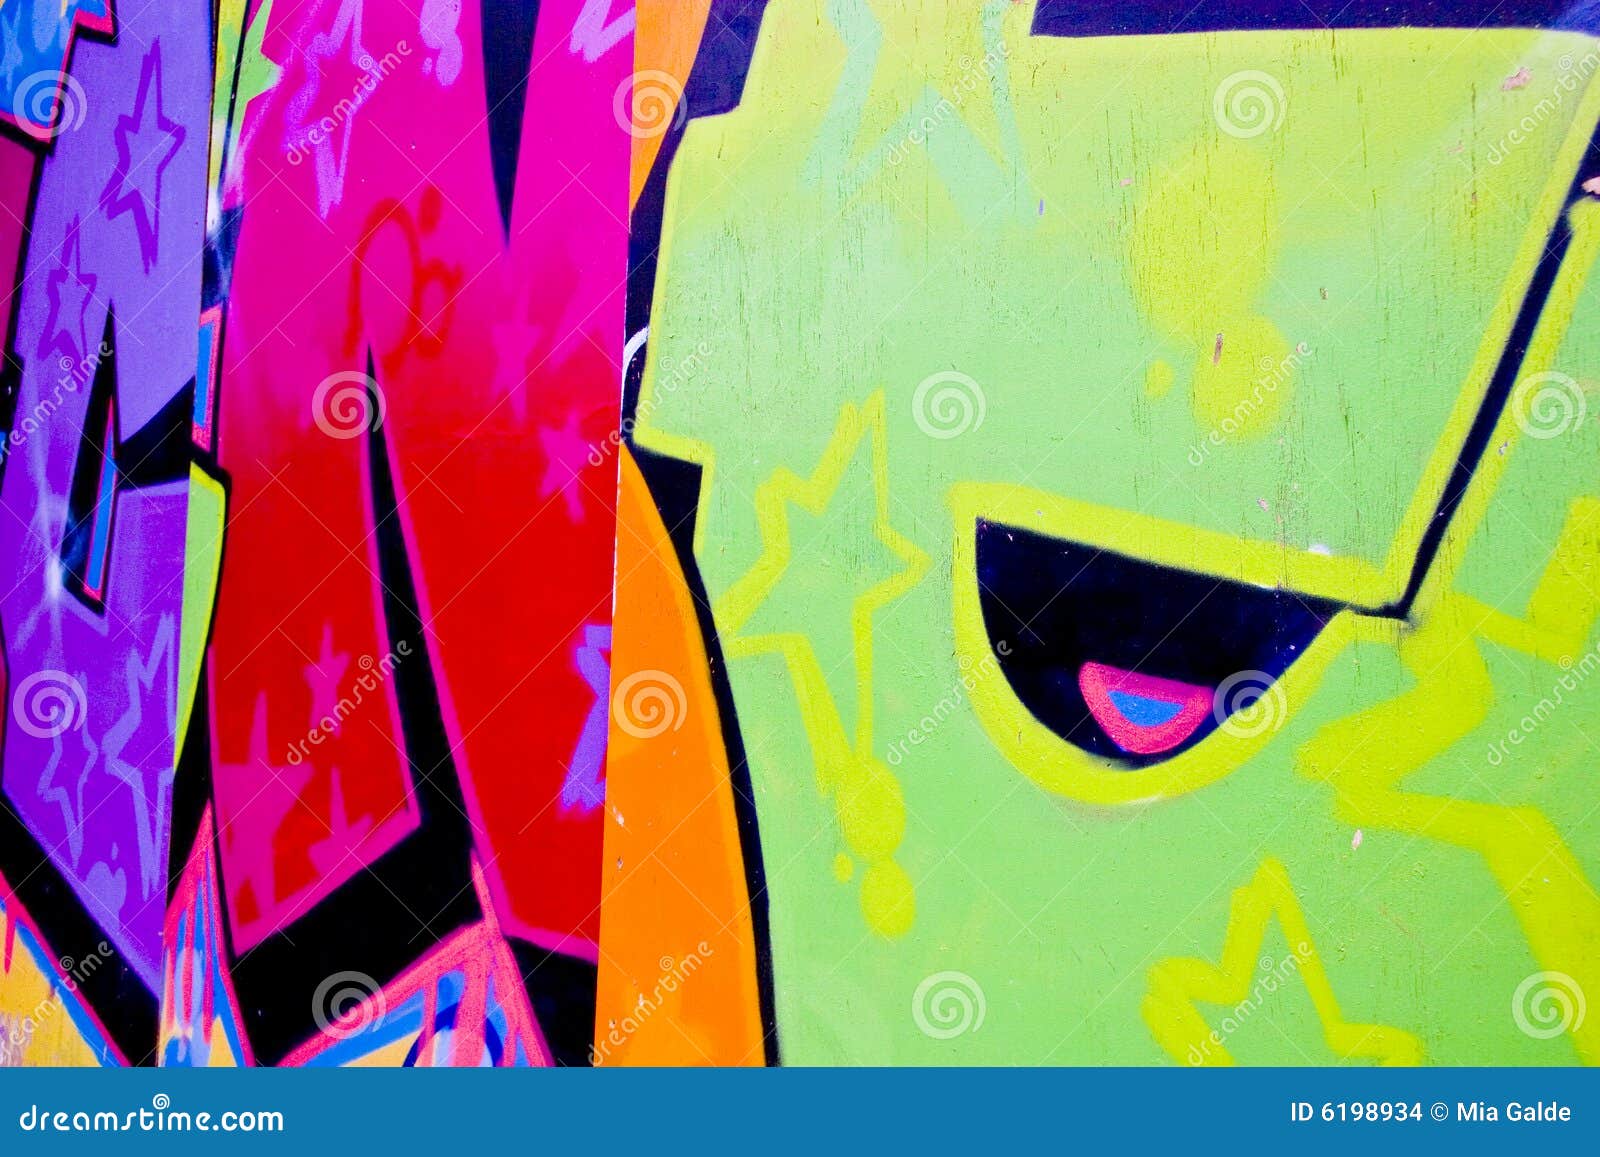 Graffiti listy. Kolor graffiti ścianę listów płótna